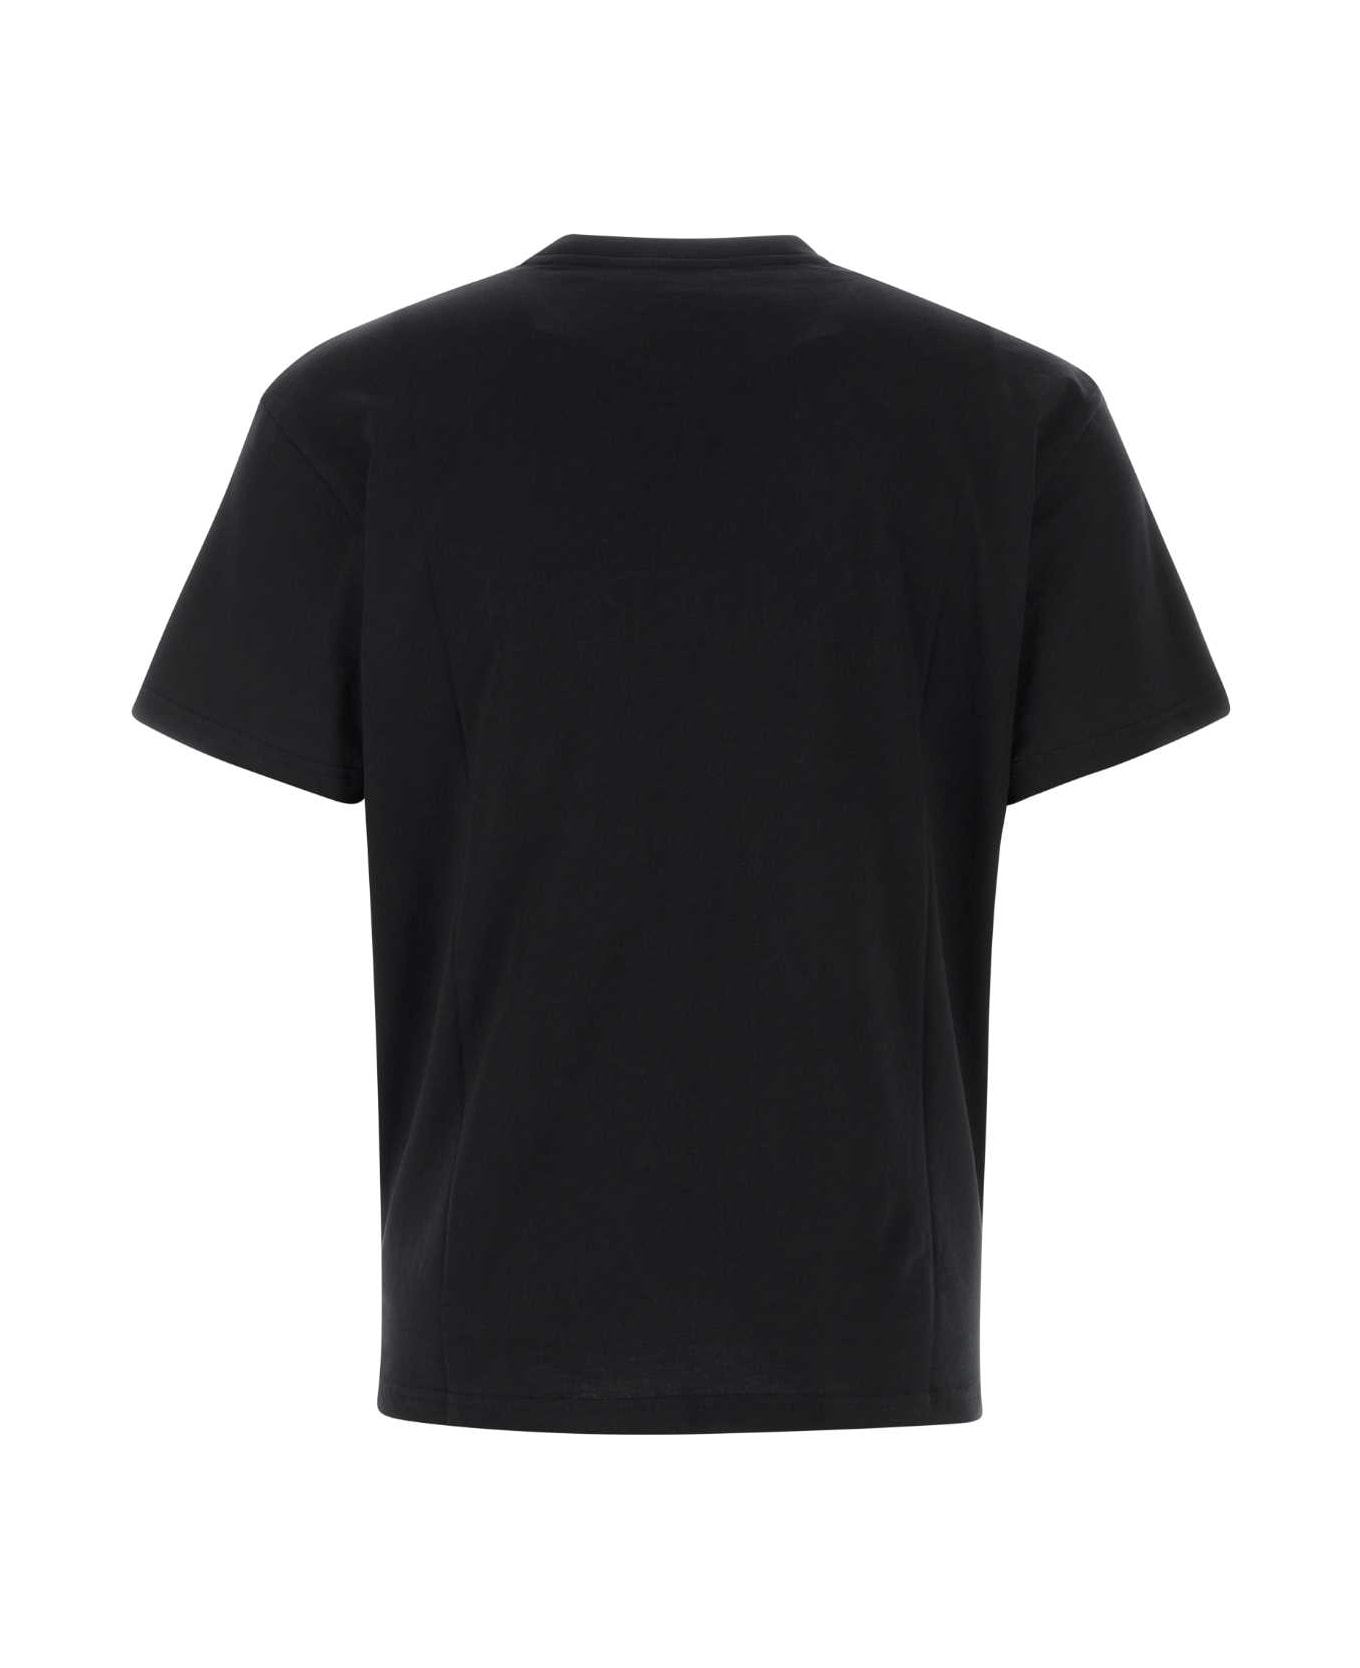 J.W. Anderson Black Cotton T-shirt - Black